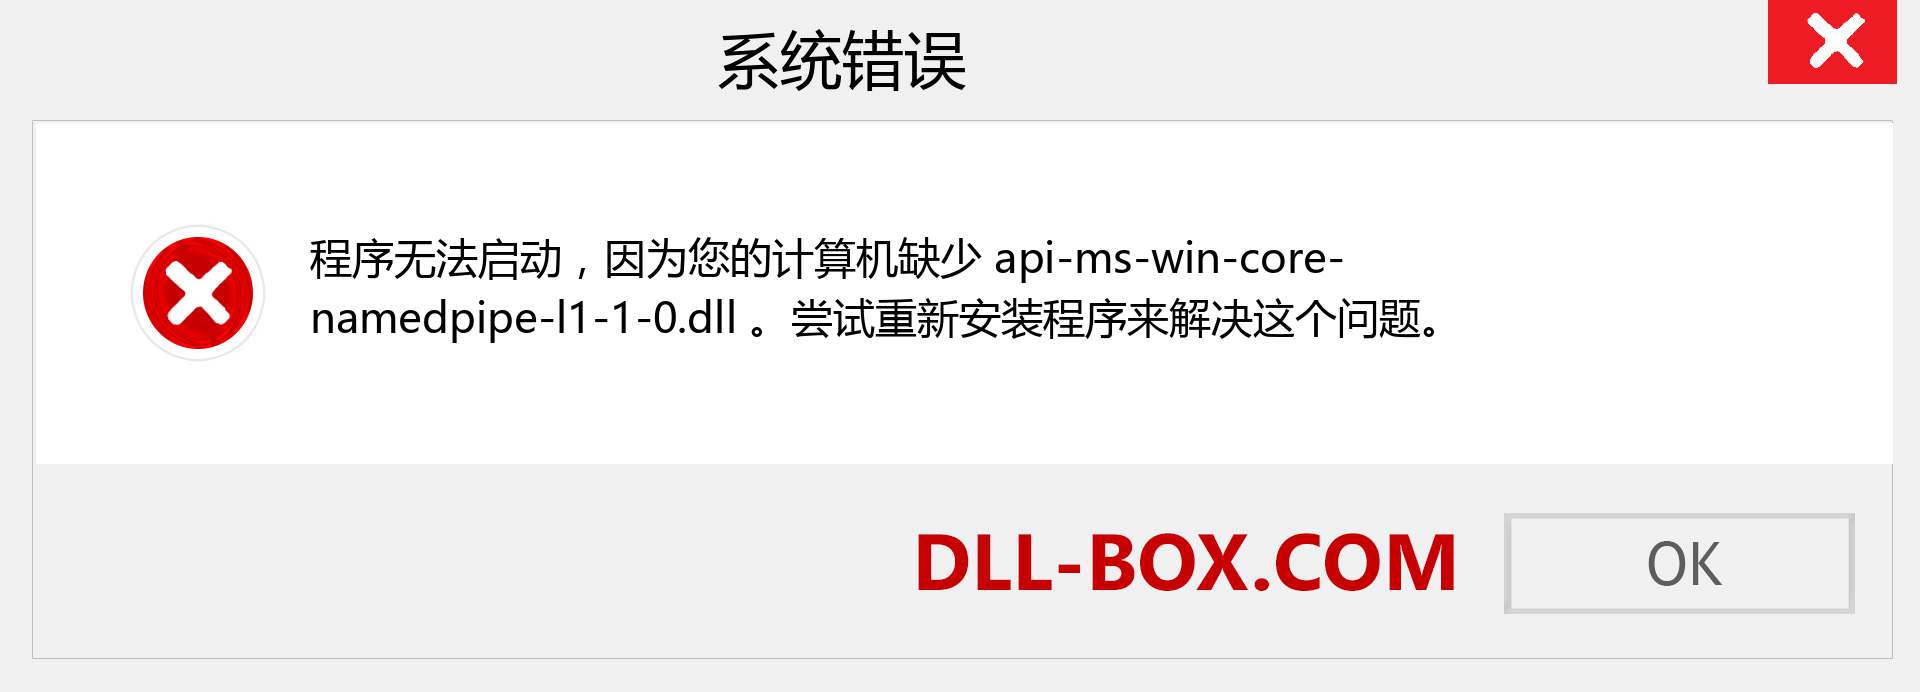 api-ms-win-core-namedpipe-l1-1-0.dll 文件丢失？。 适用于 Windows 7、8、10 的下载 - 修复 Windows、照片、图像上的 api-ms-win-core-namedpipe-l1-1-0 dll 丢失错误